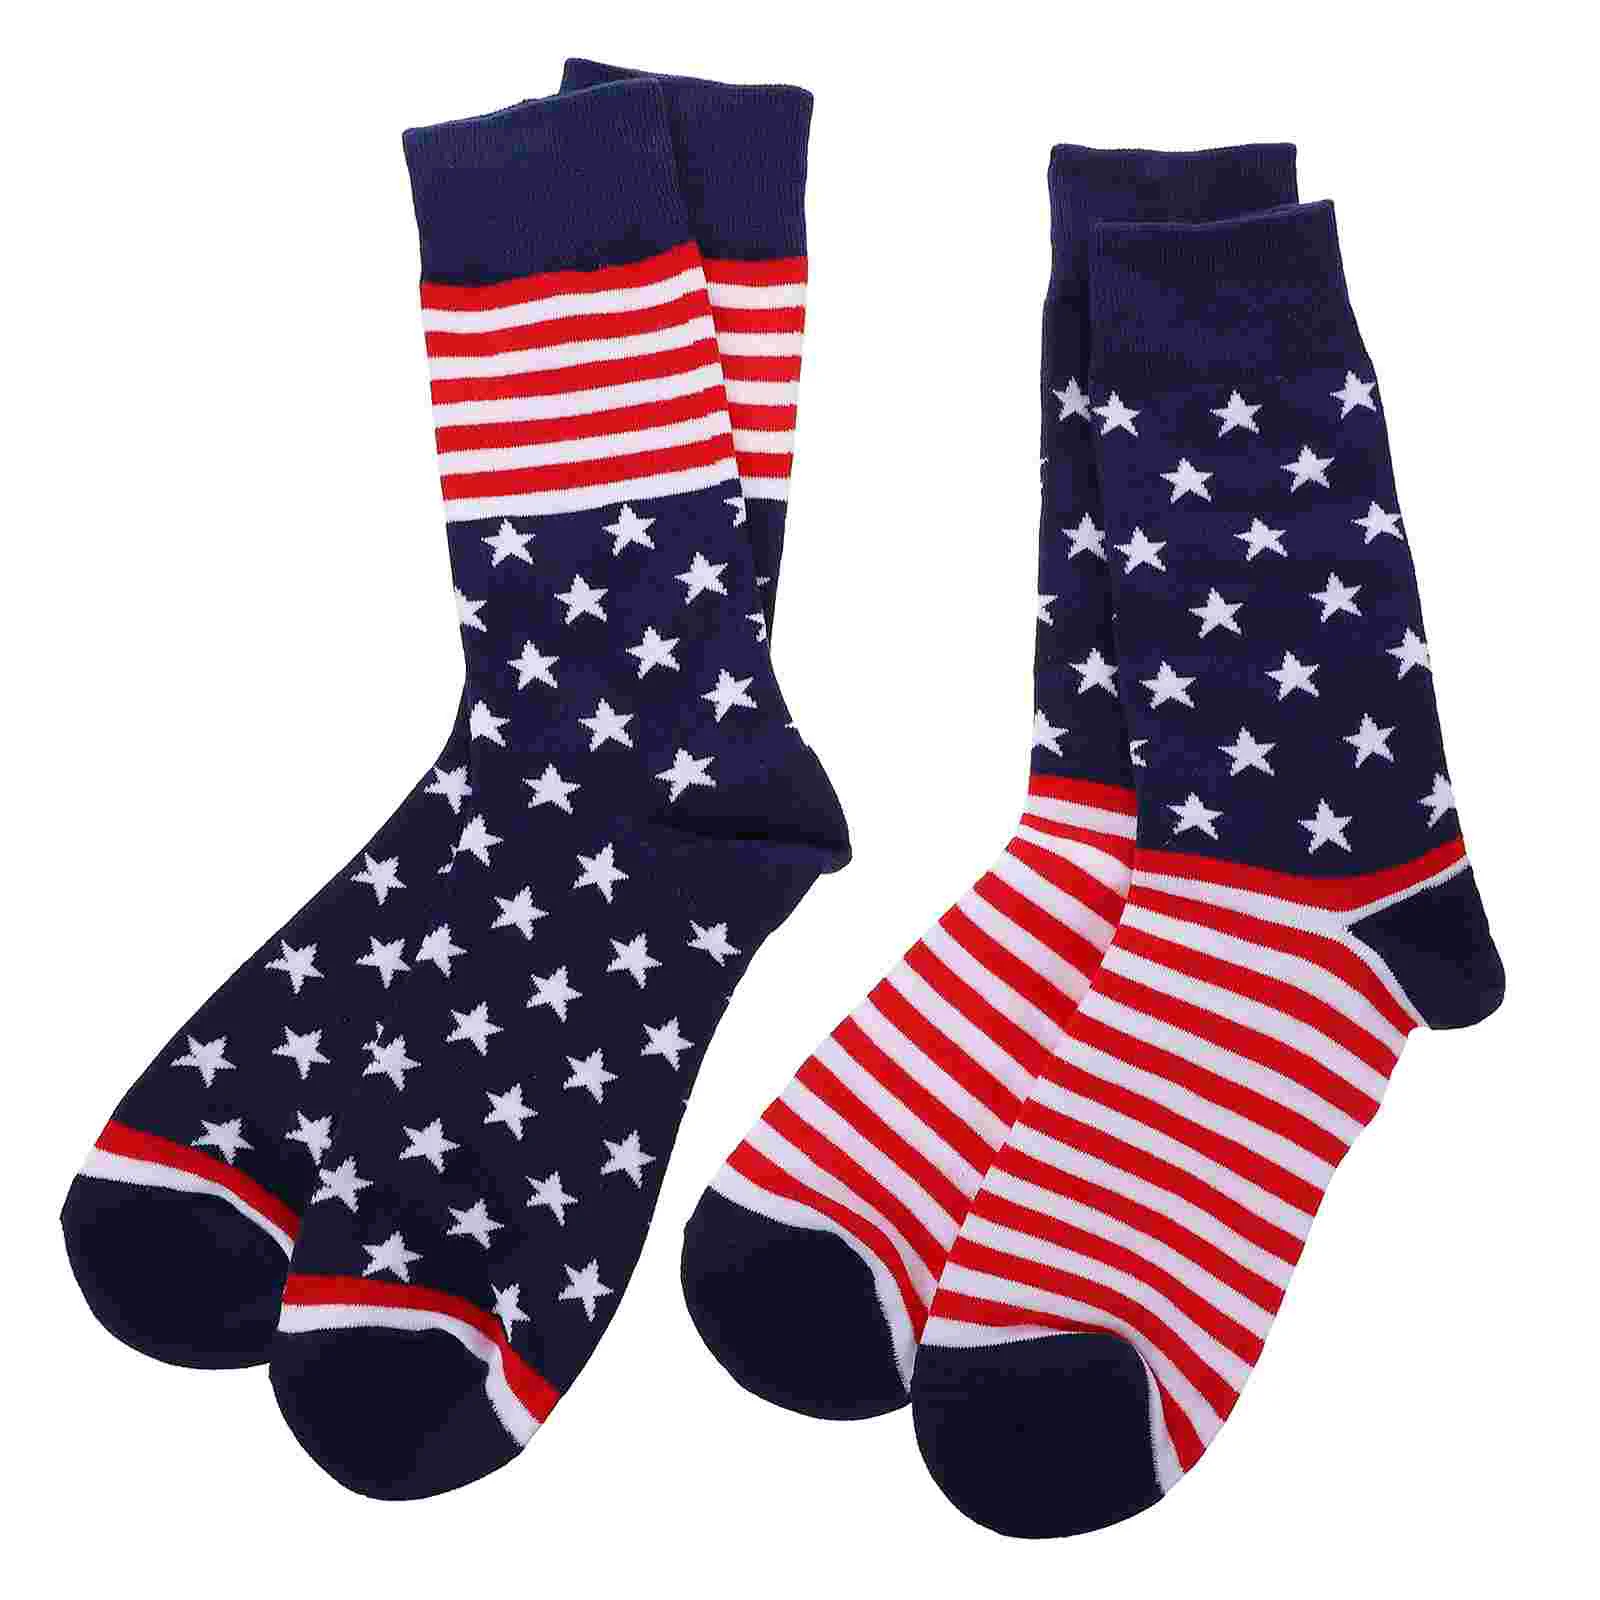 

2 Pairs Men's Socks United States Flag Fashion The Day Tube Cotton Stockings Women